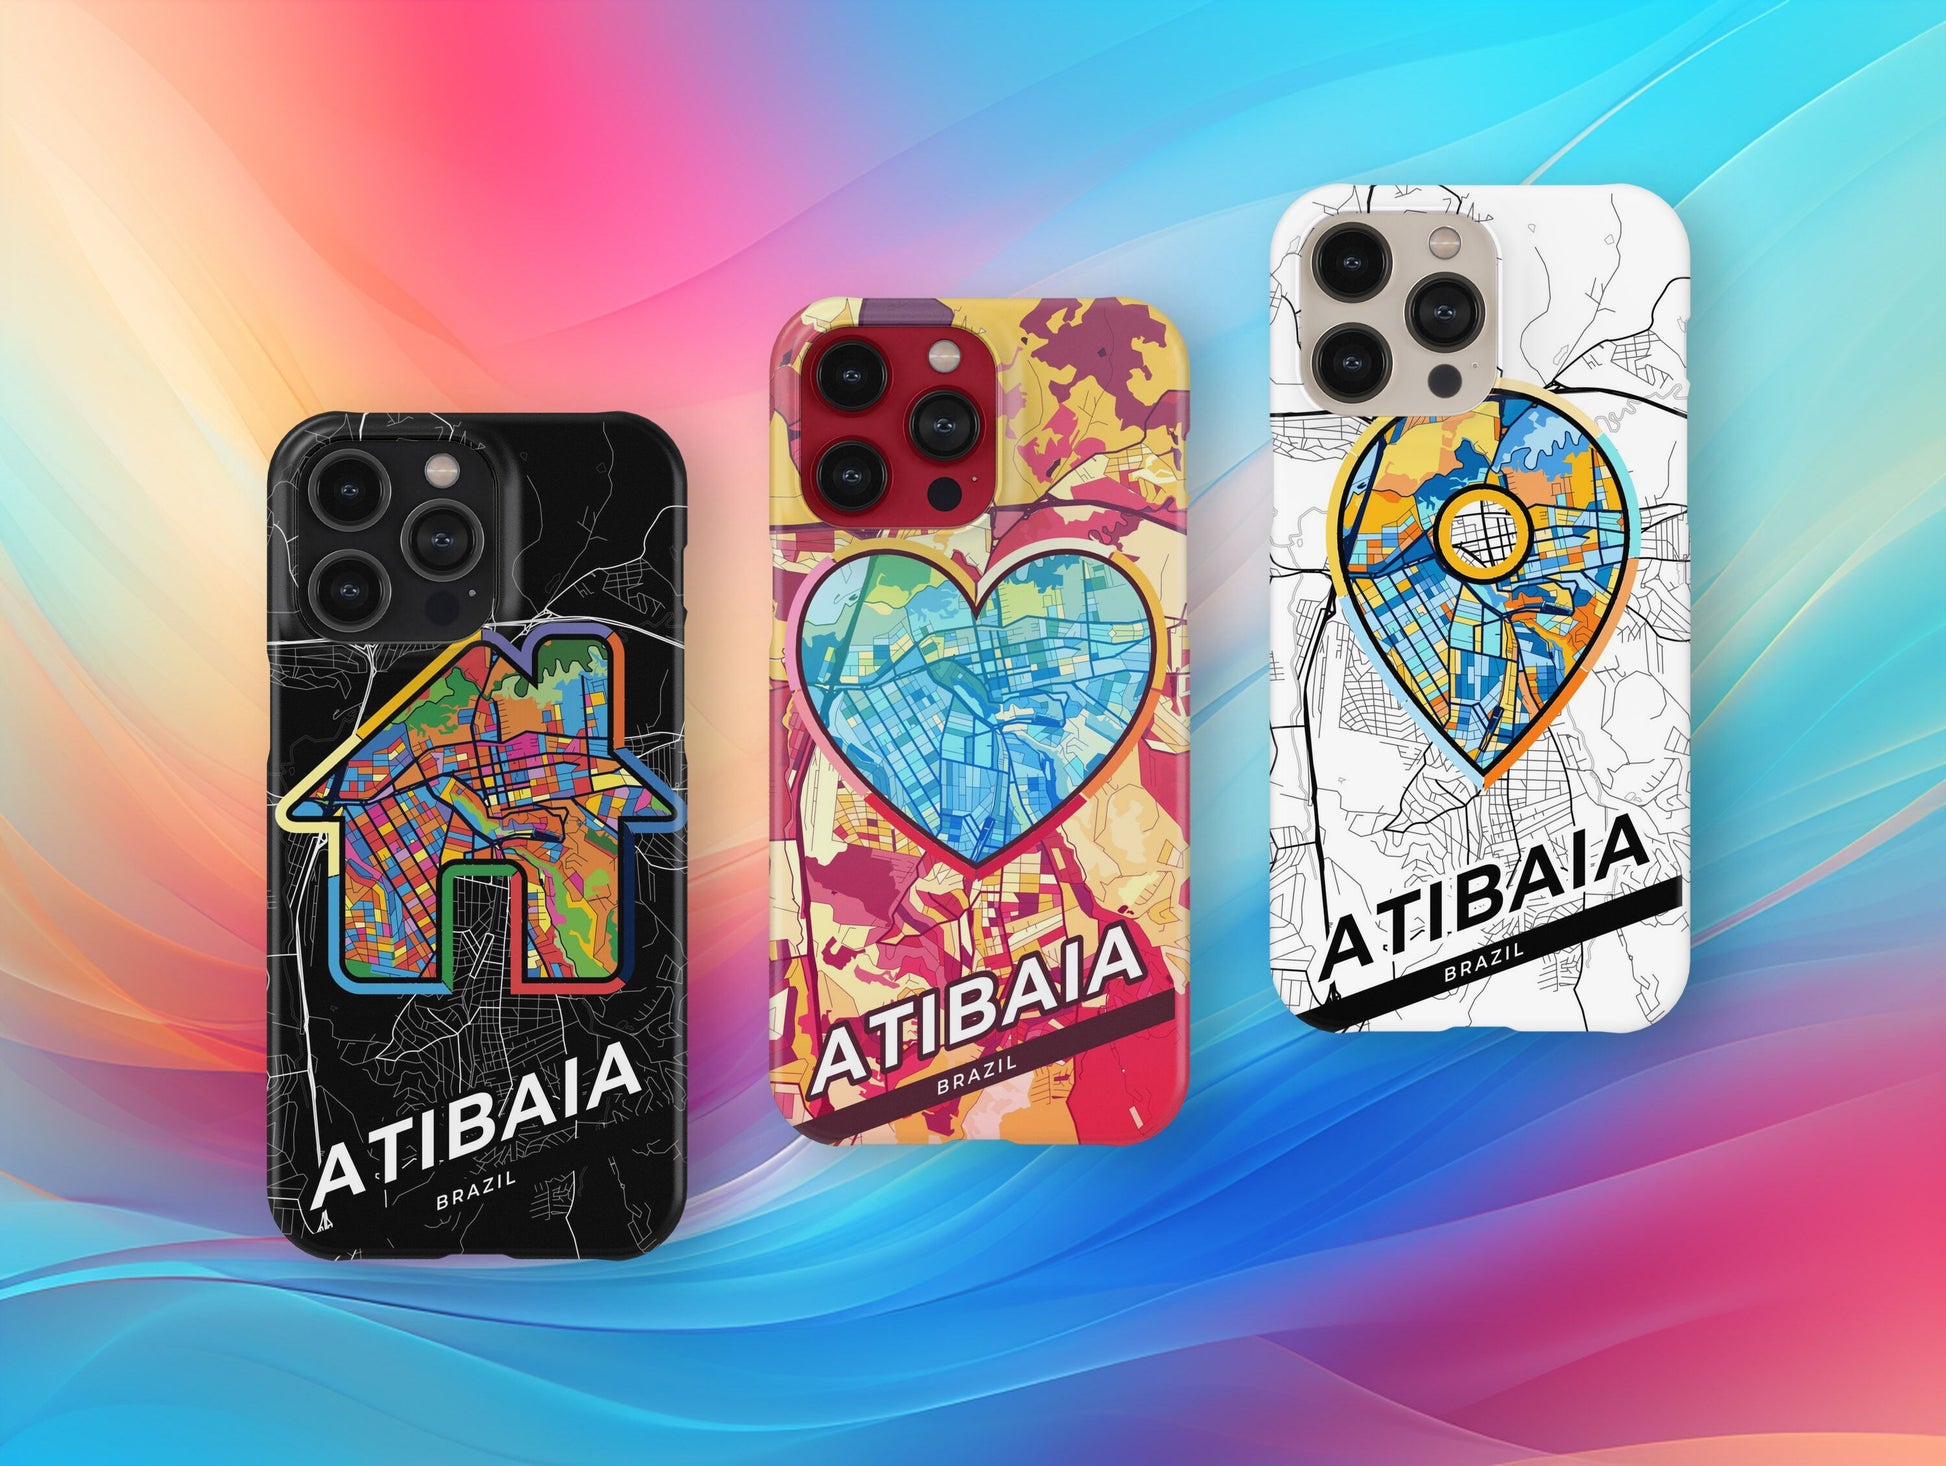 Atibaia Brazil slim phone case with colorful icon. Birthday, wedding or housewarming gift. Couple match cases.